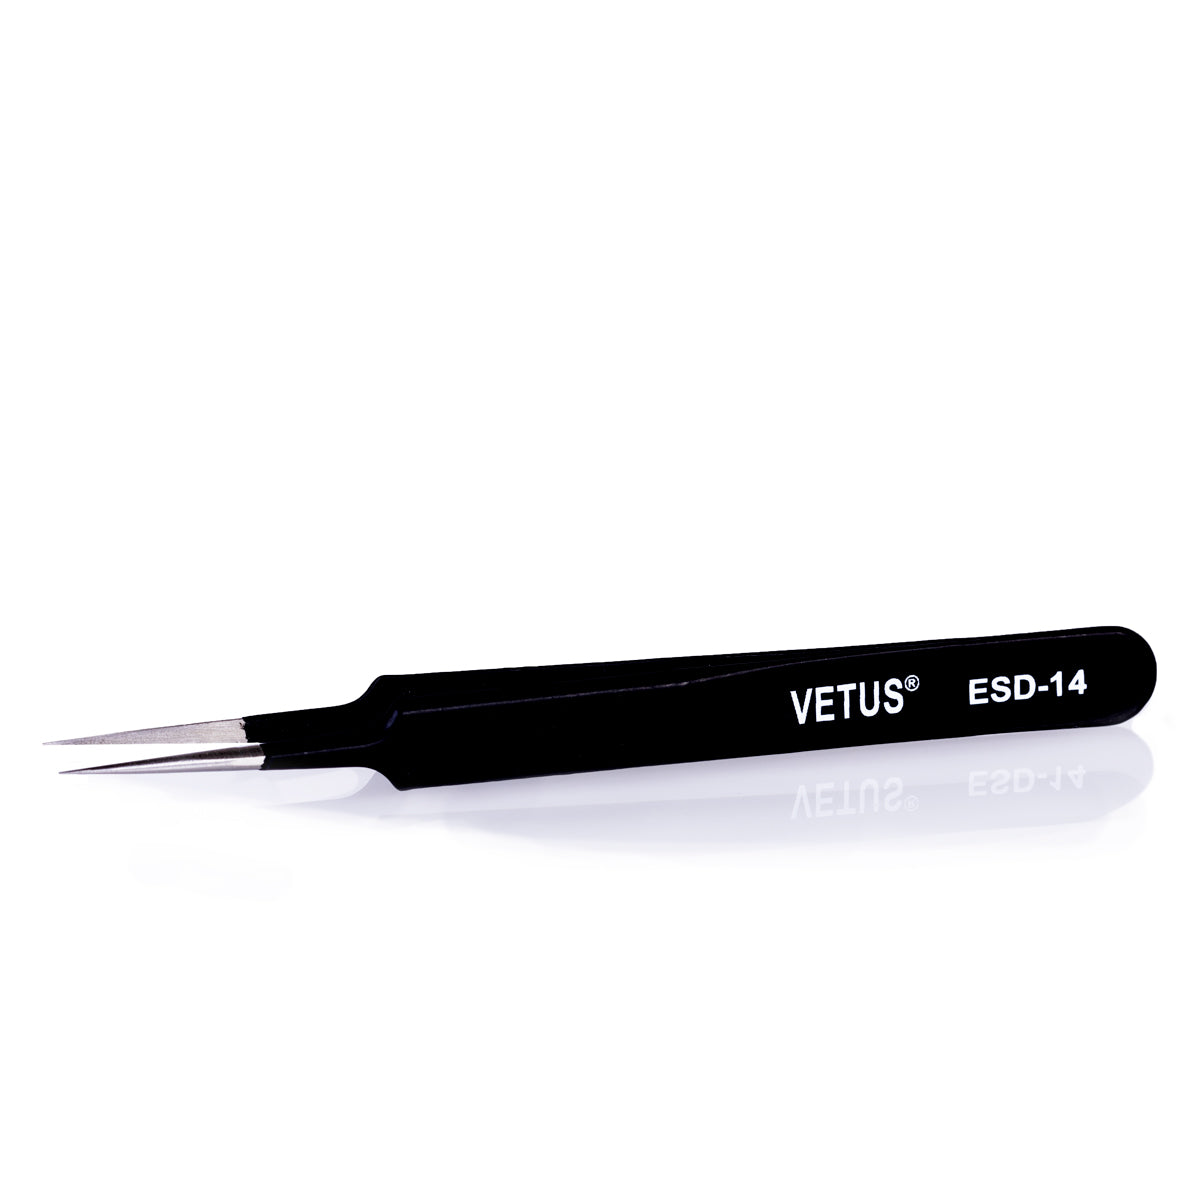 Vetus Tweezers - ESD 14 for Eyelash Extension Application